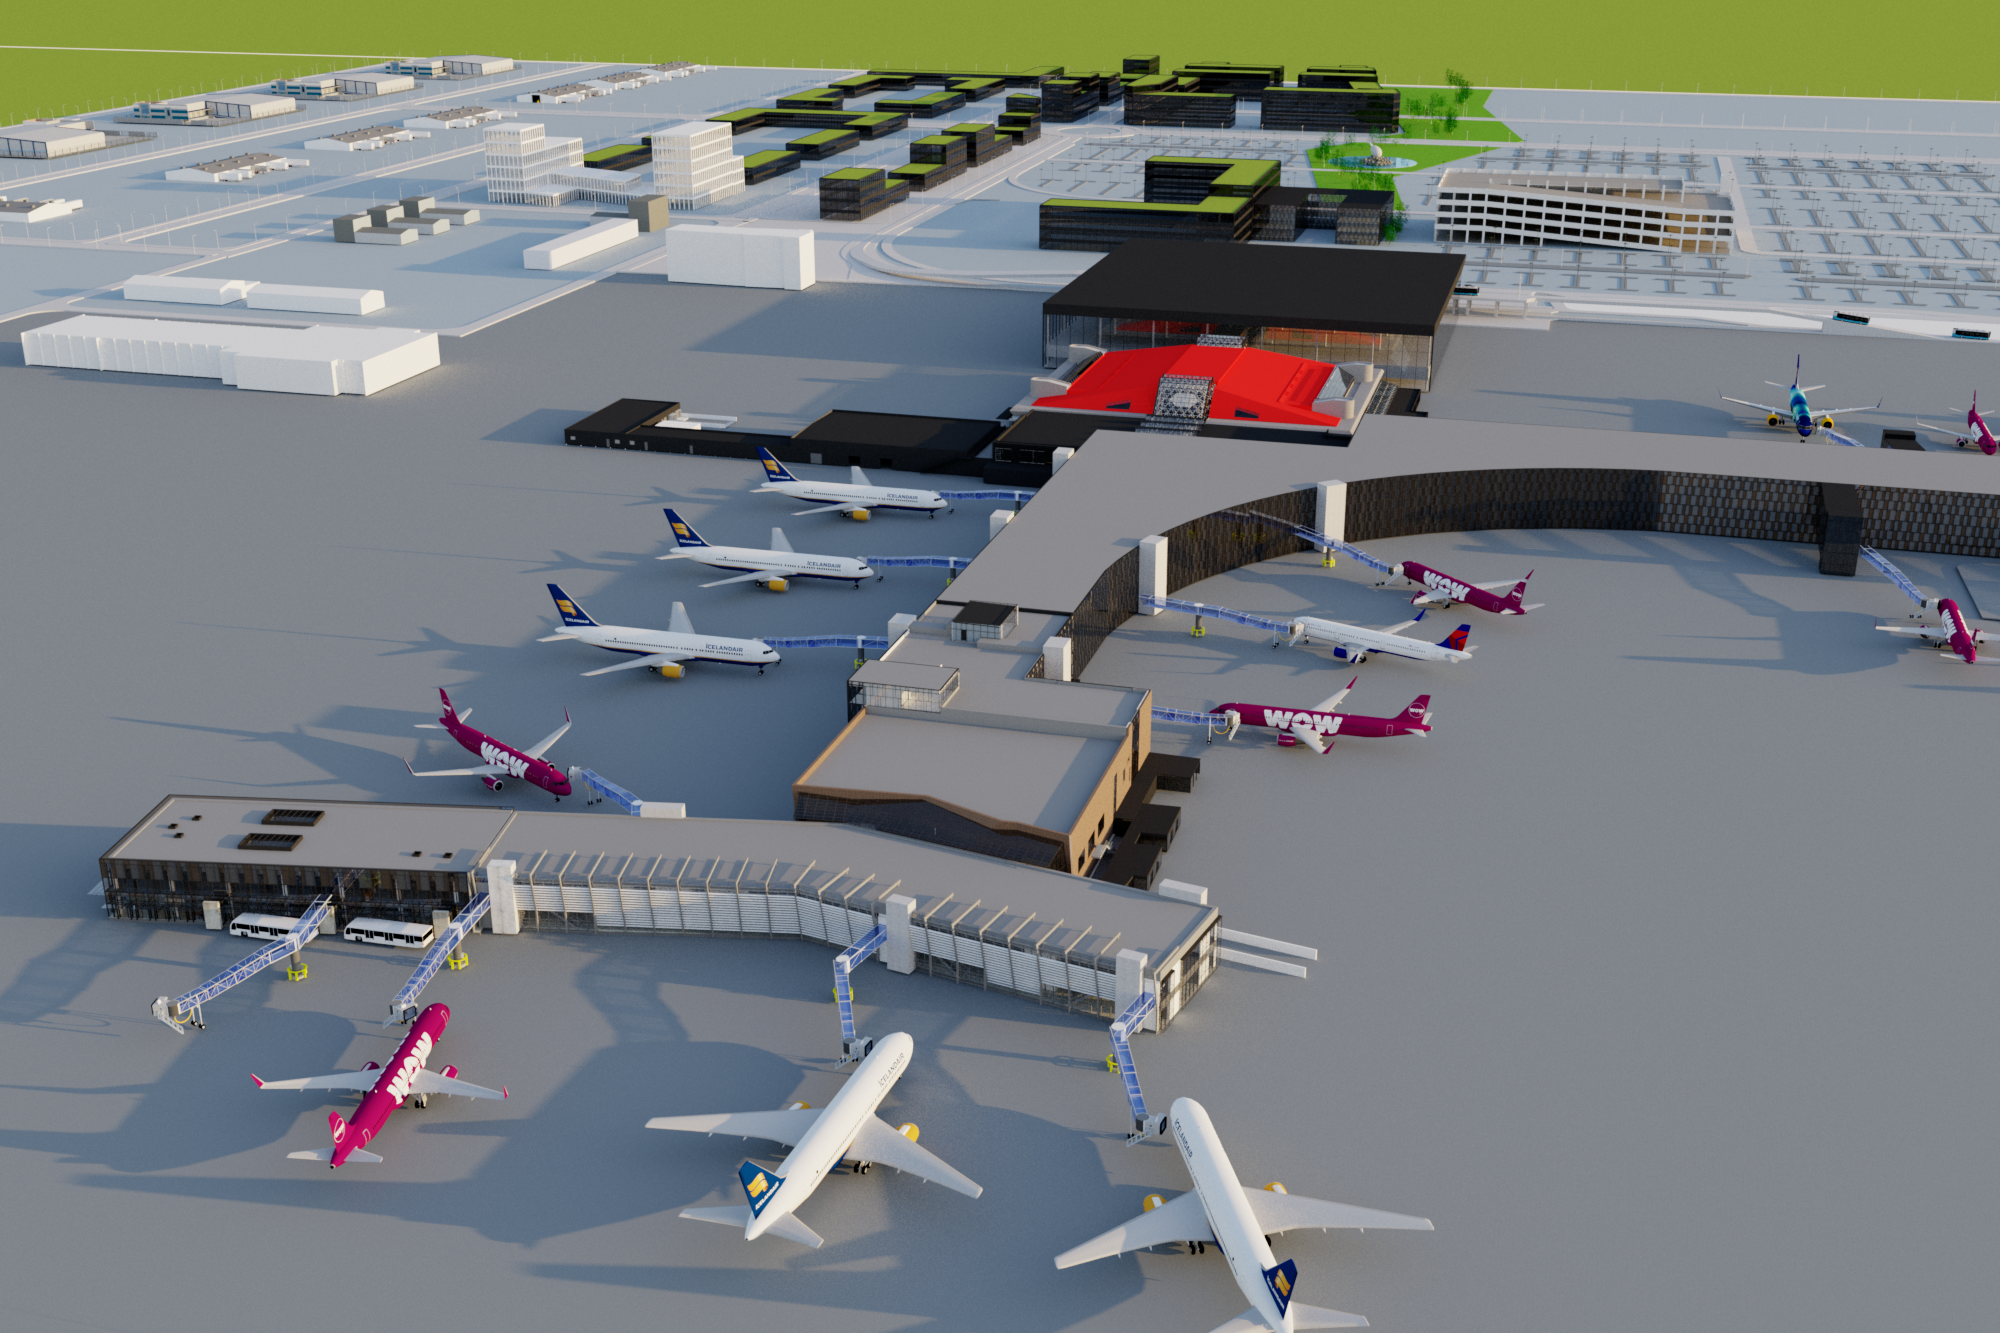 The plan of reconstruction of main terminal of Keflavik airport // Source: Isavia